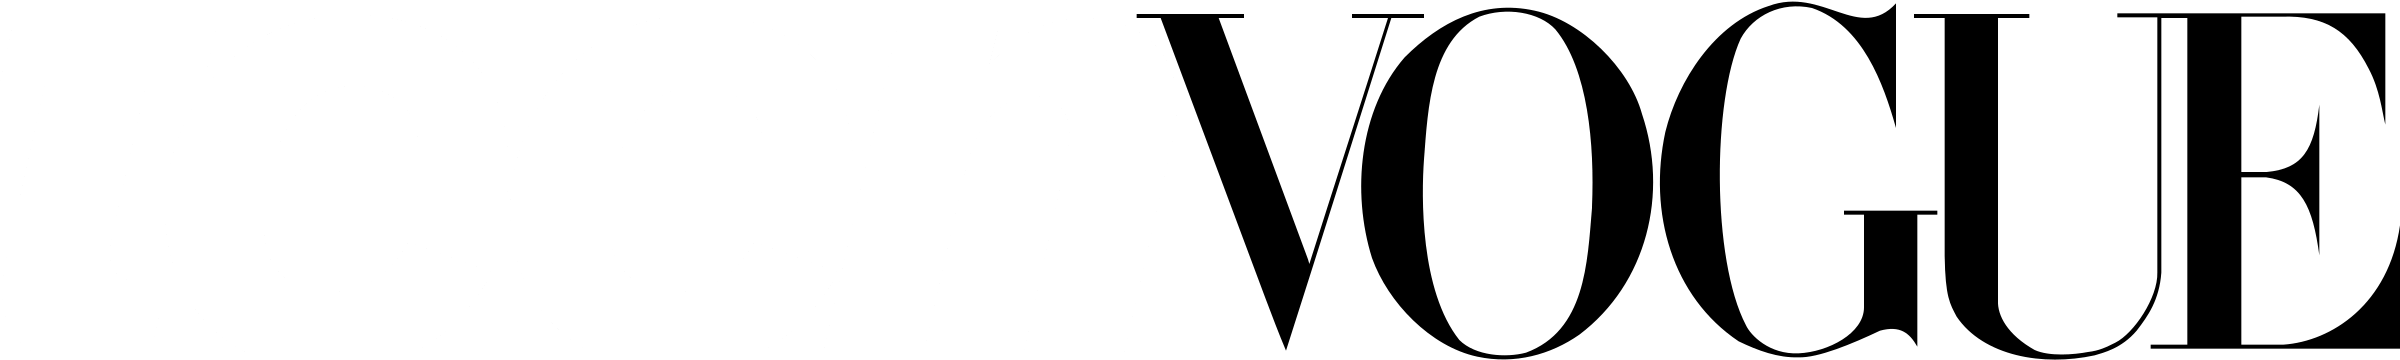 Vogue Logo - TEEN Vogue Logo PNG Transparent & SVG Vector